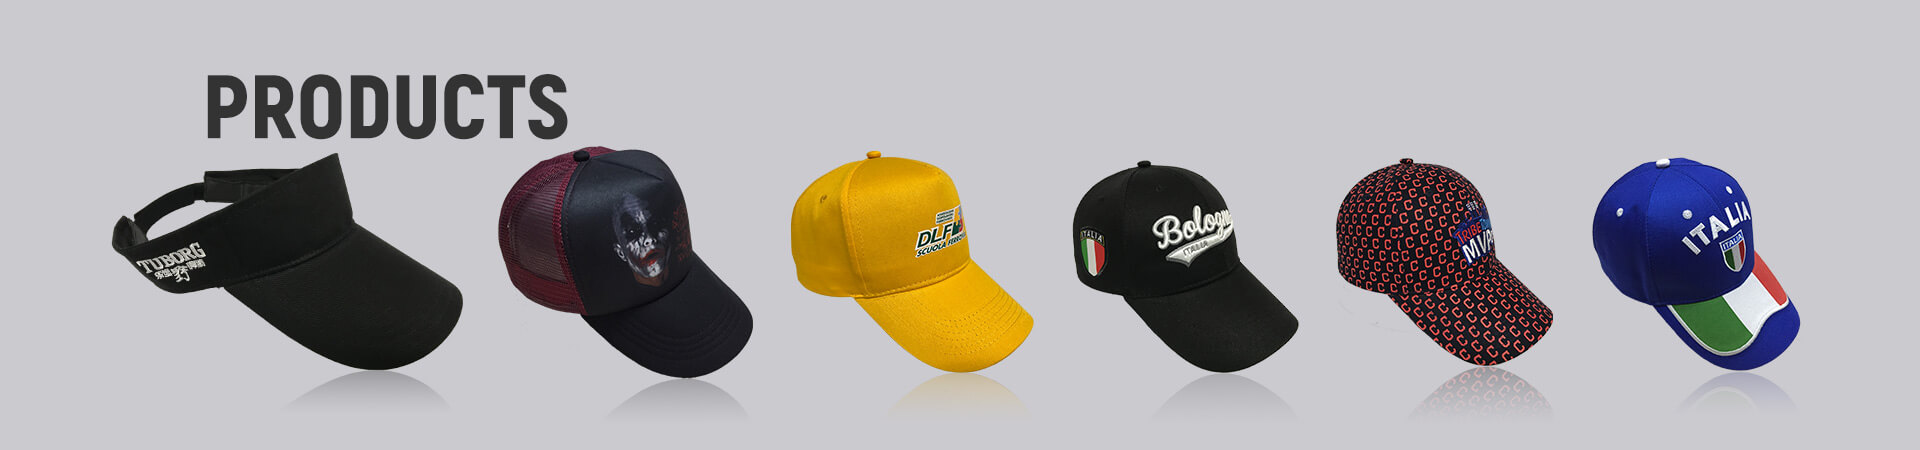 Sombrero del camionero Archives - Gorra de béisbol, gorra deportiva, gorra de golf, gorra de pescador, gorra de camionero